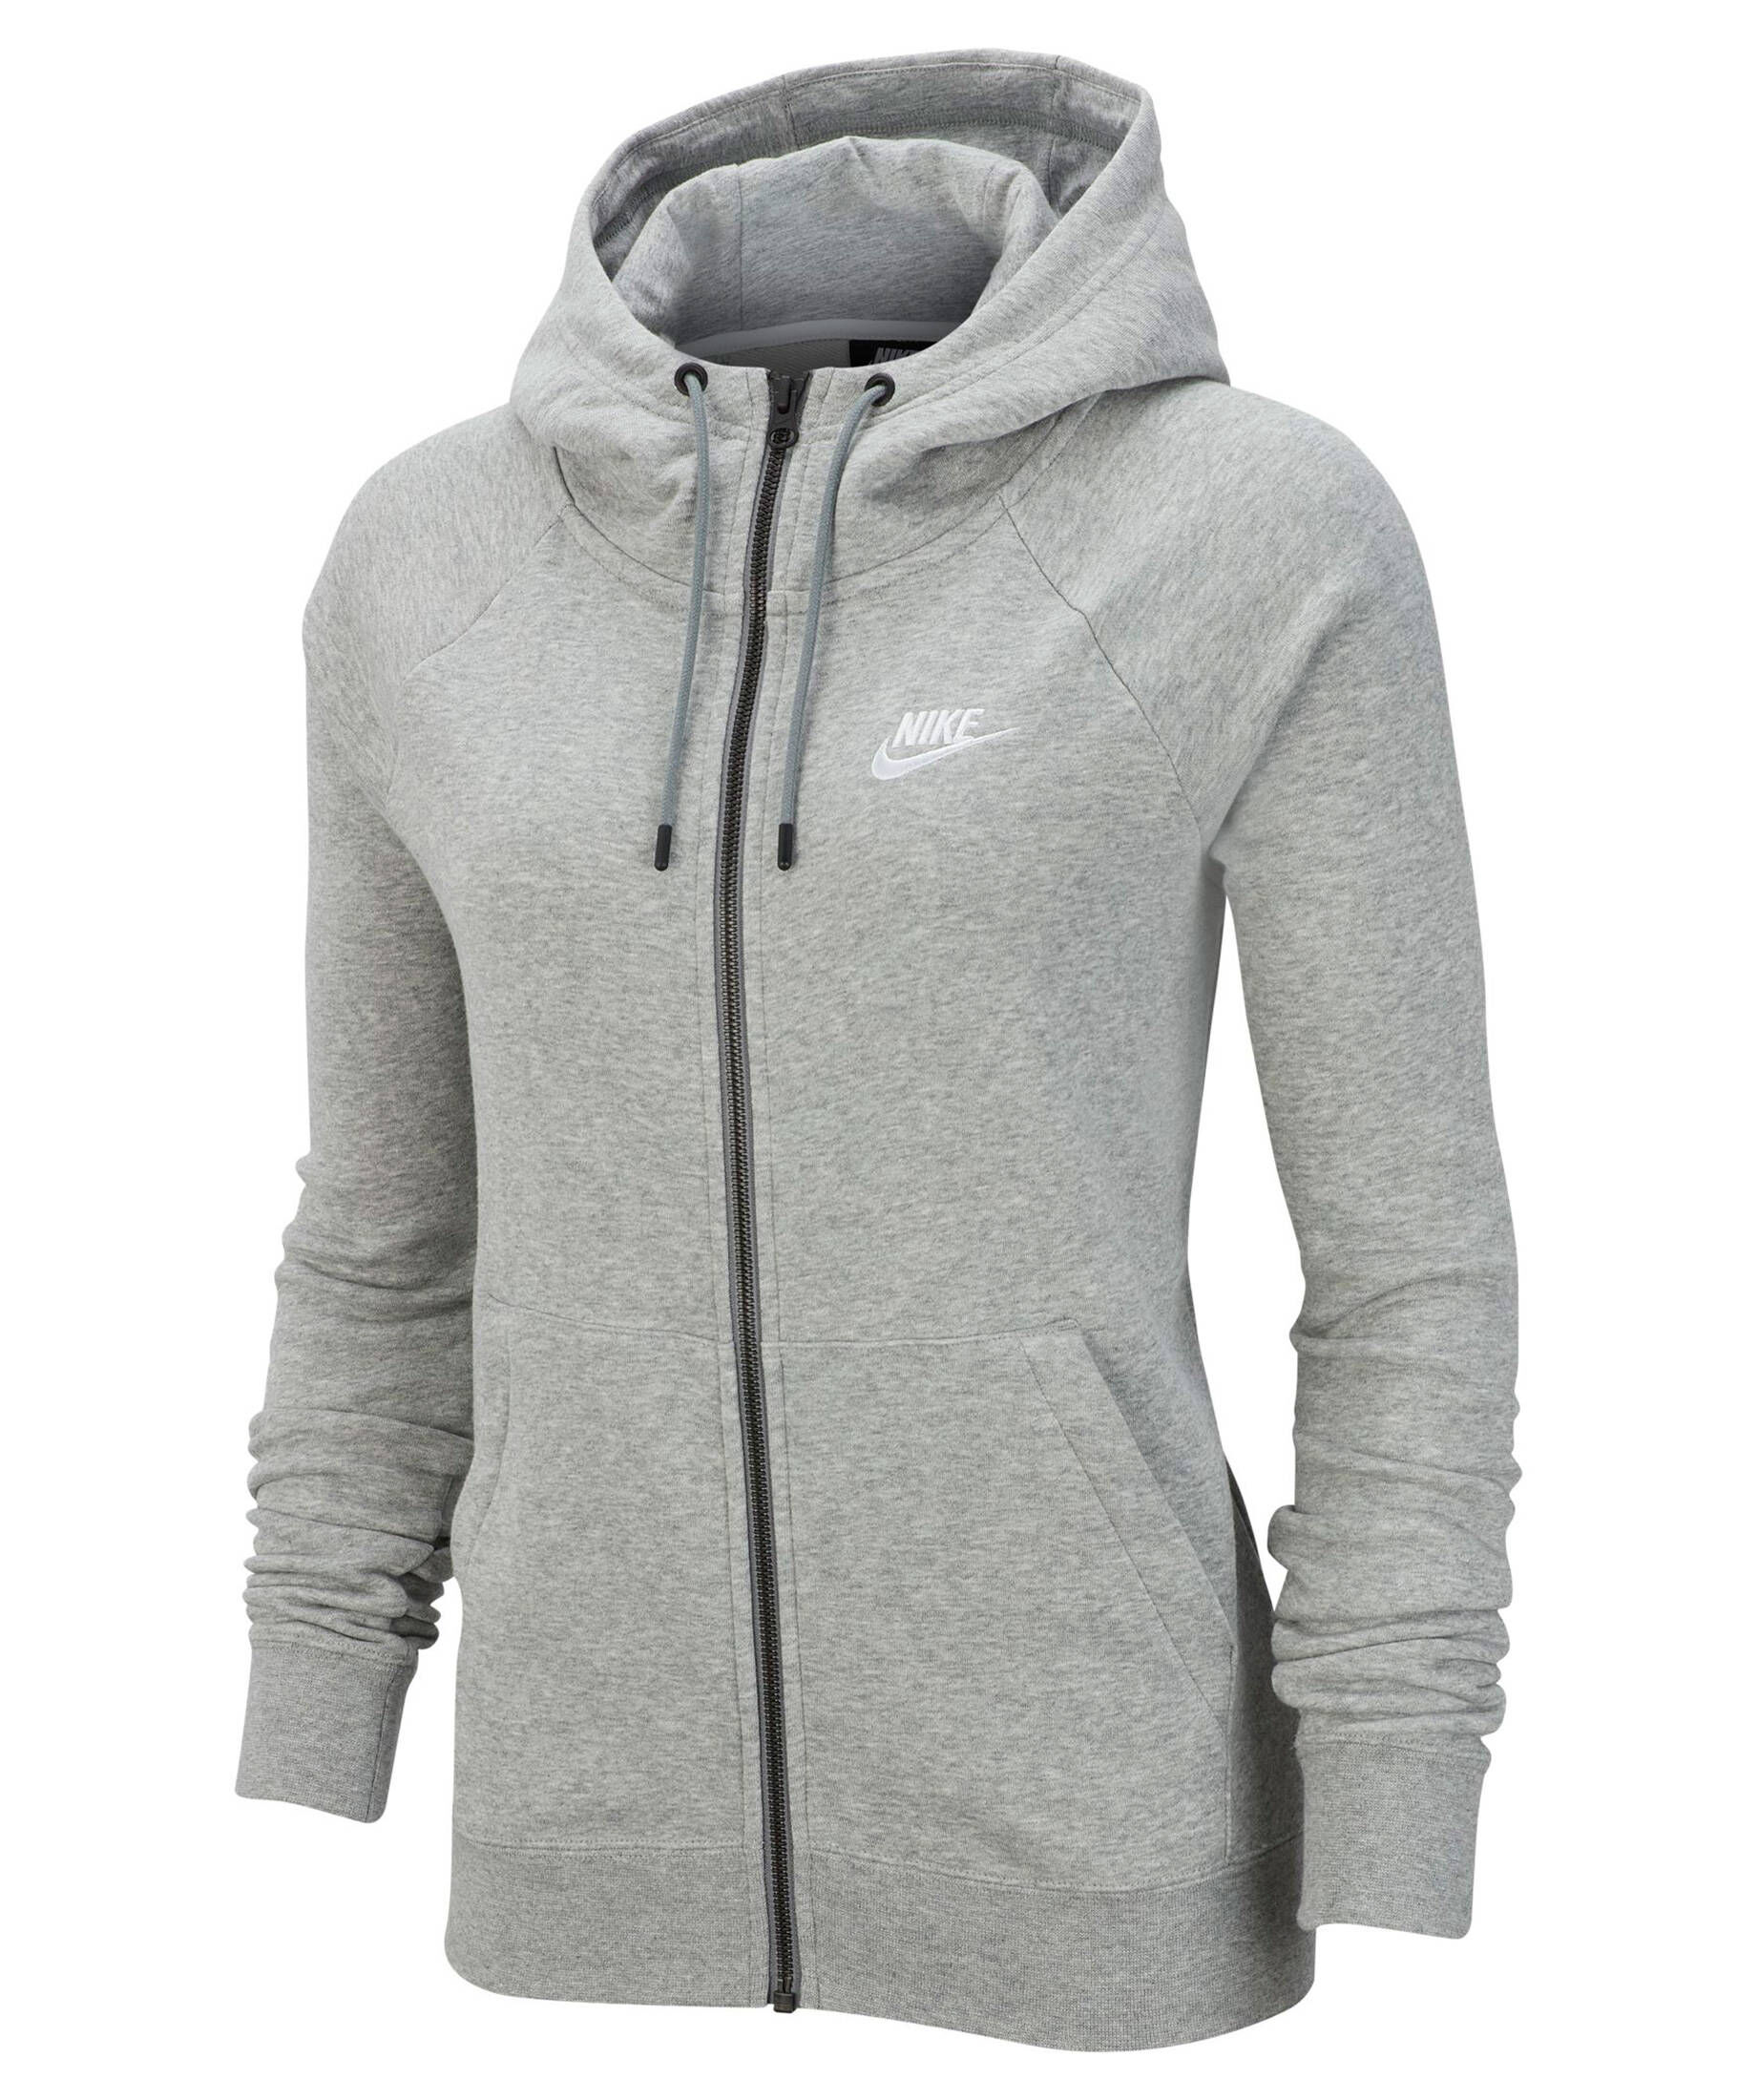 native boiler Huh Nike Sportswear Damen Sweatjacke ESSENTIAL kaufen | engelhorn